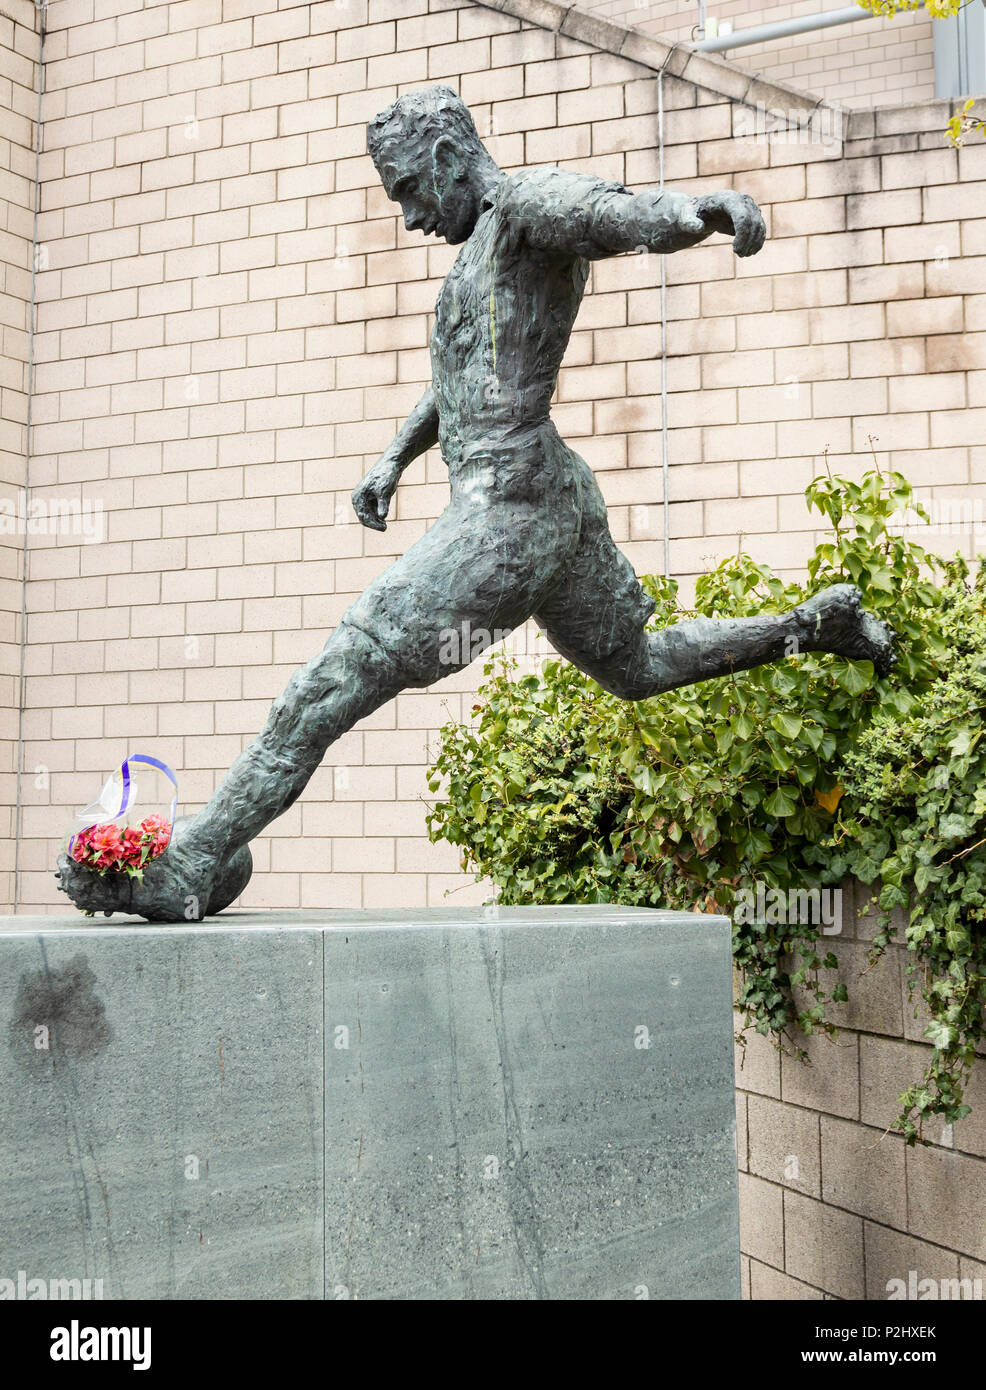 Statue of  Newcastle United football legend Jackie Milburn, 'Wor Jackie' (our Jackie) in Newcastle upon Tyne, England, United Kingdom Stock Photo